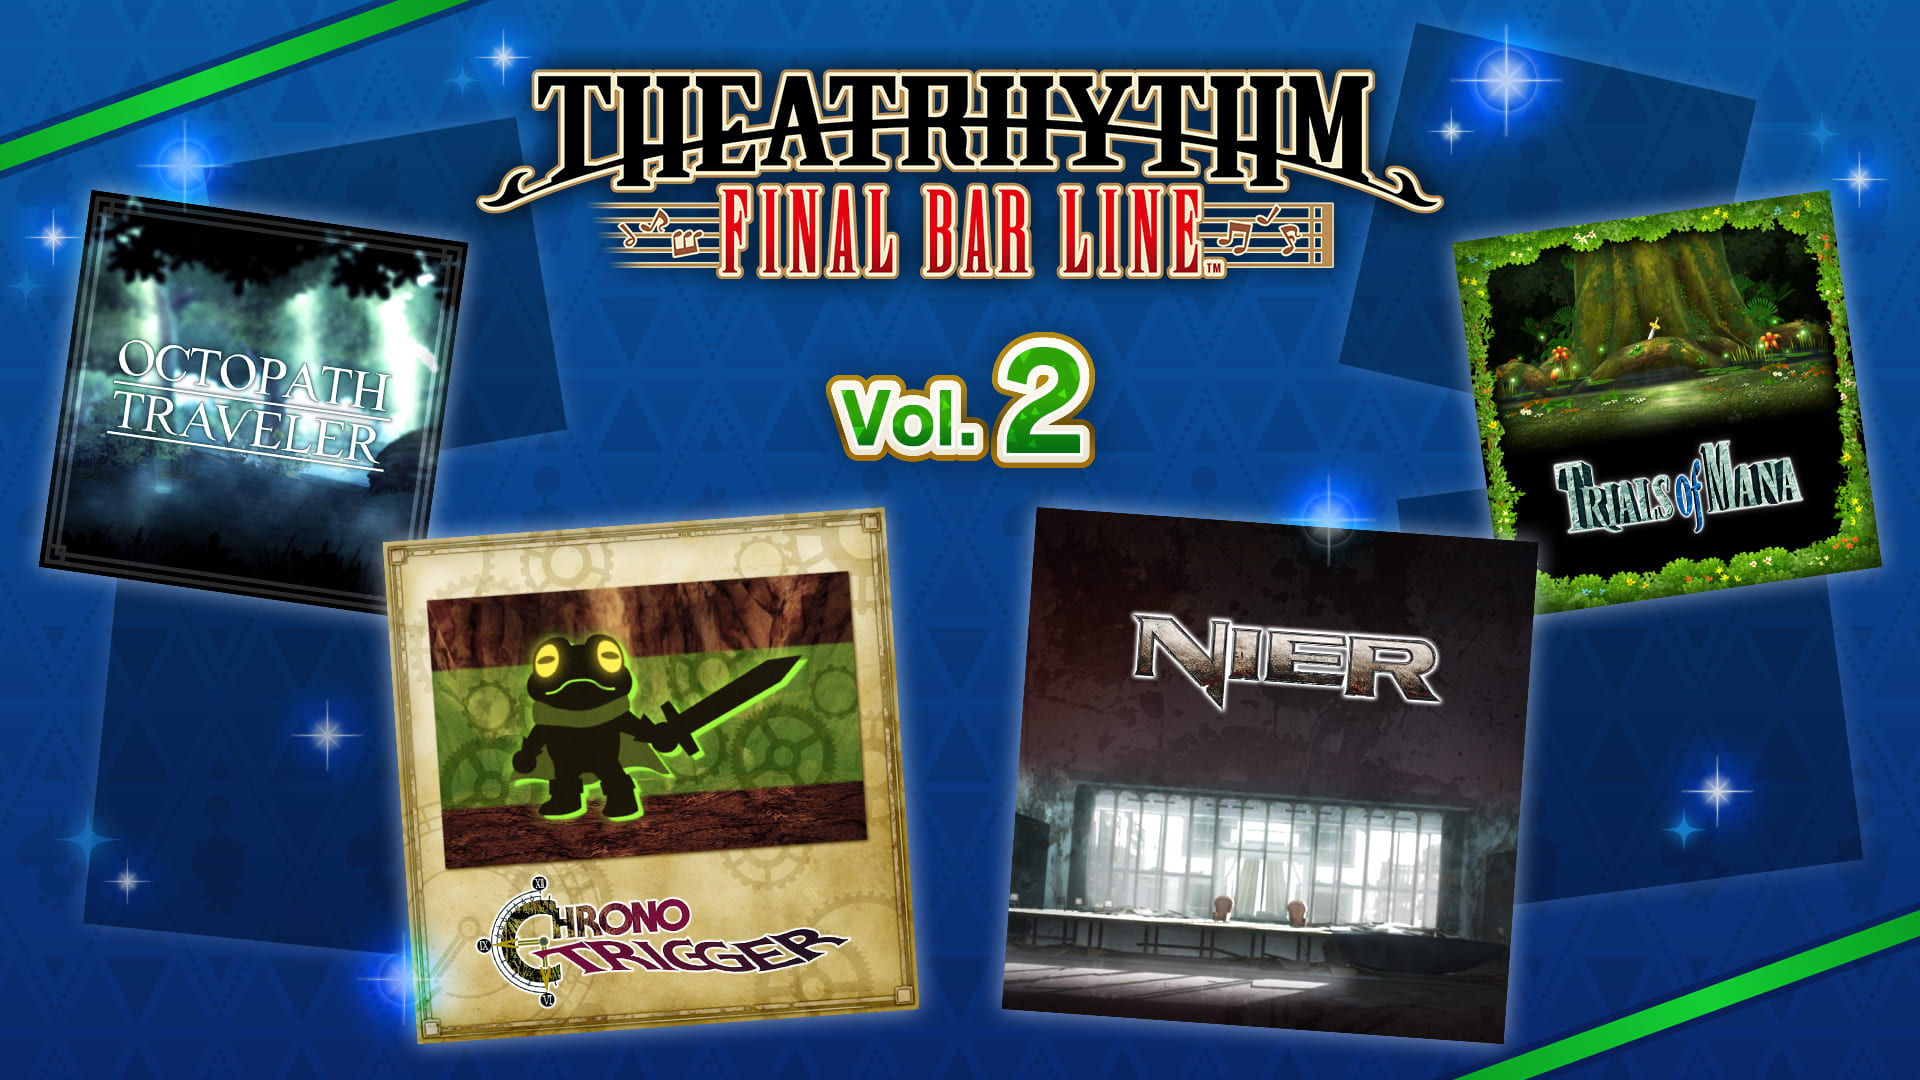 THEATRHYTHM FINAL BAR LINE Season Pass Vol. 2